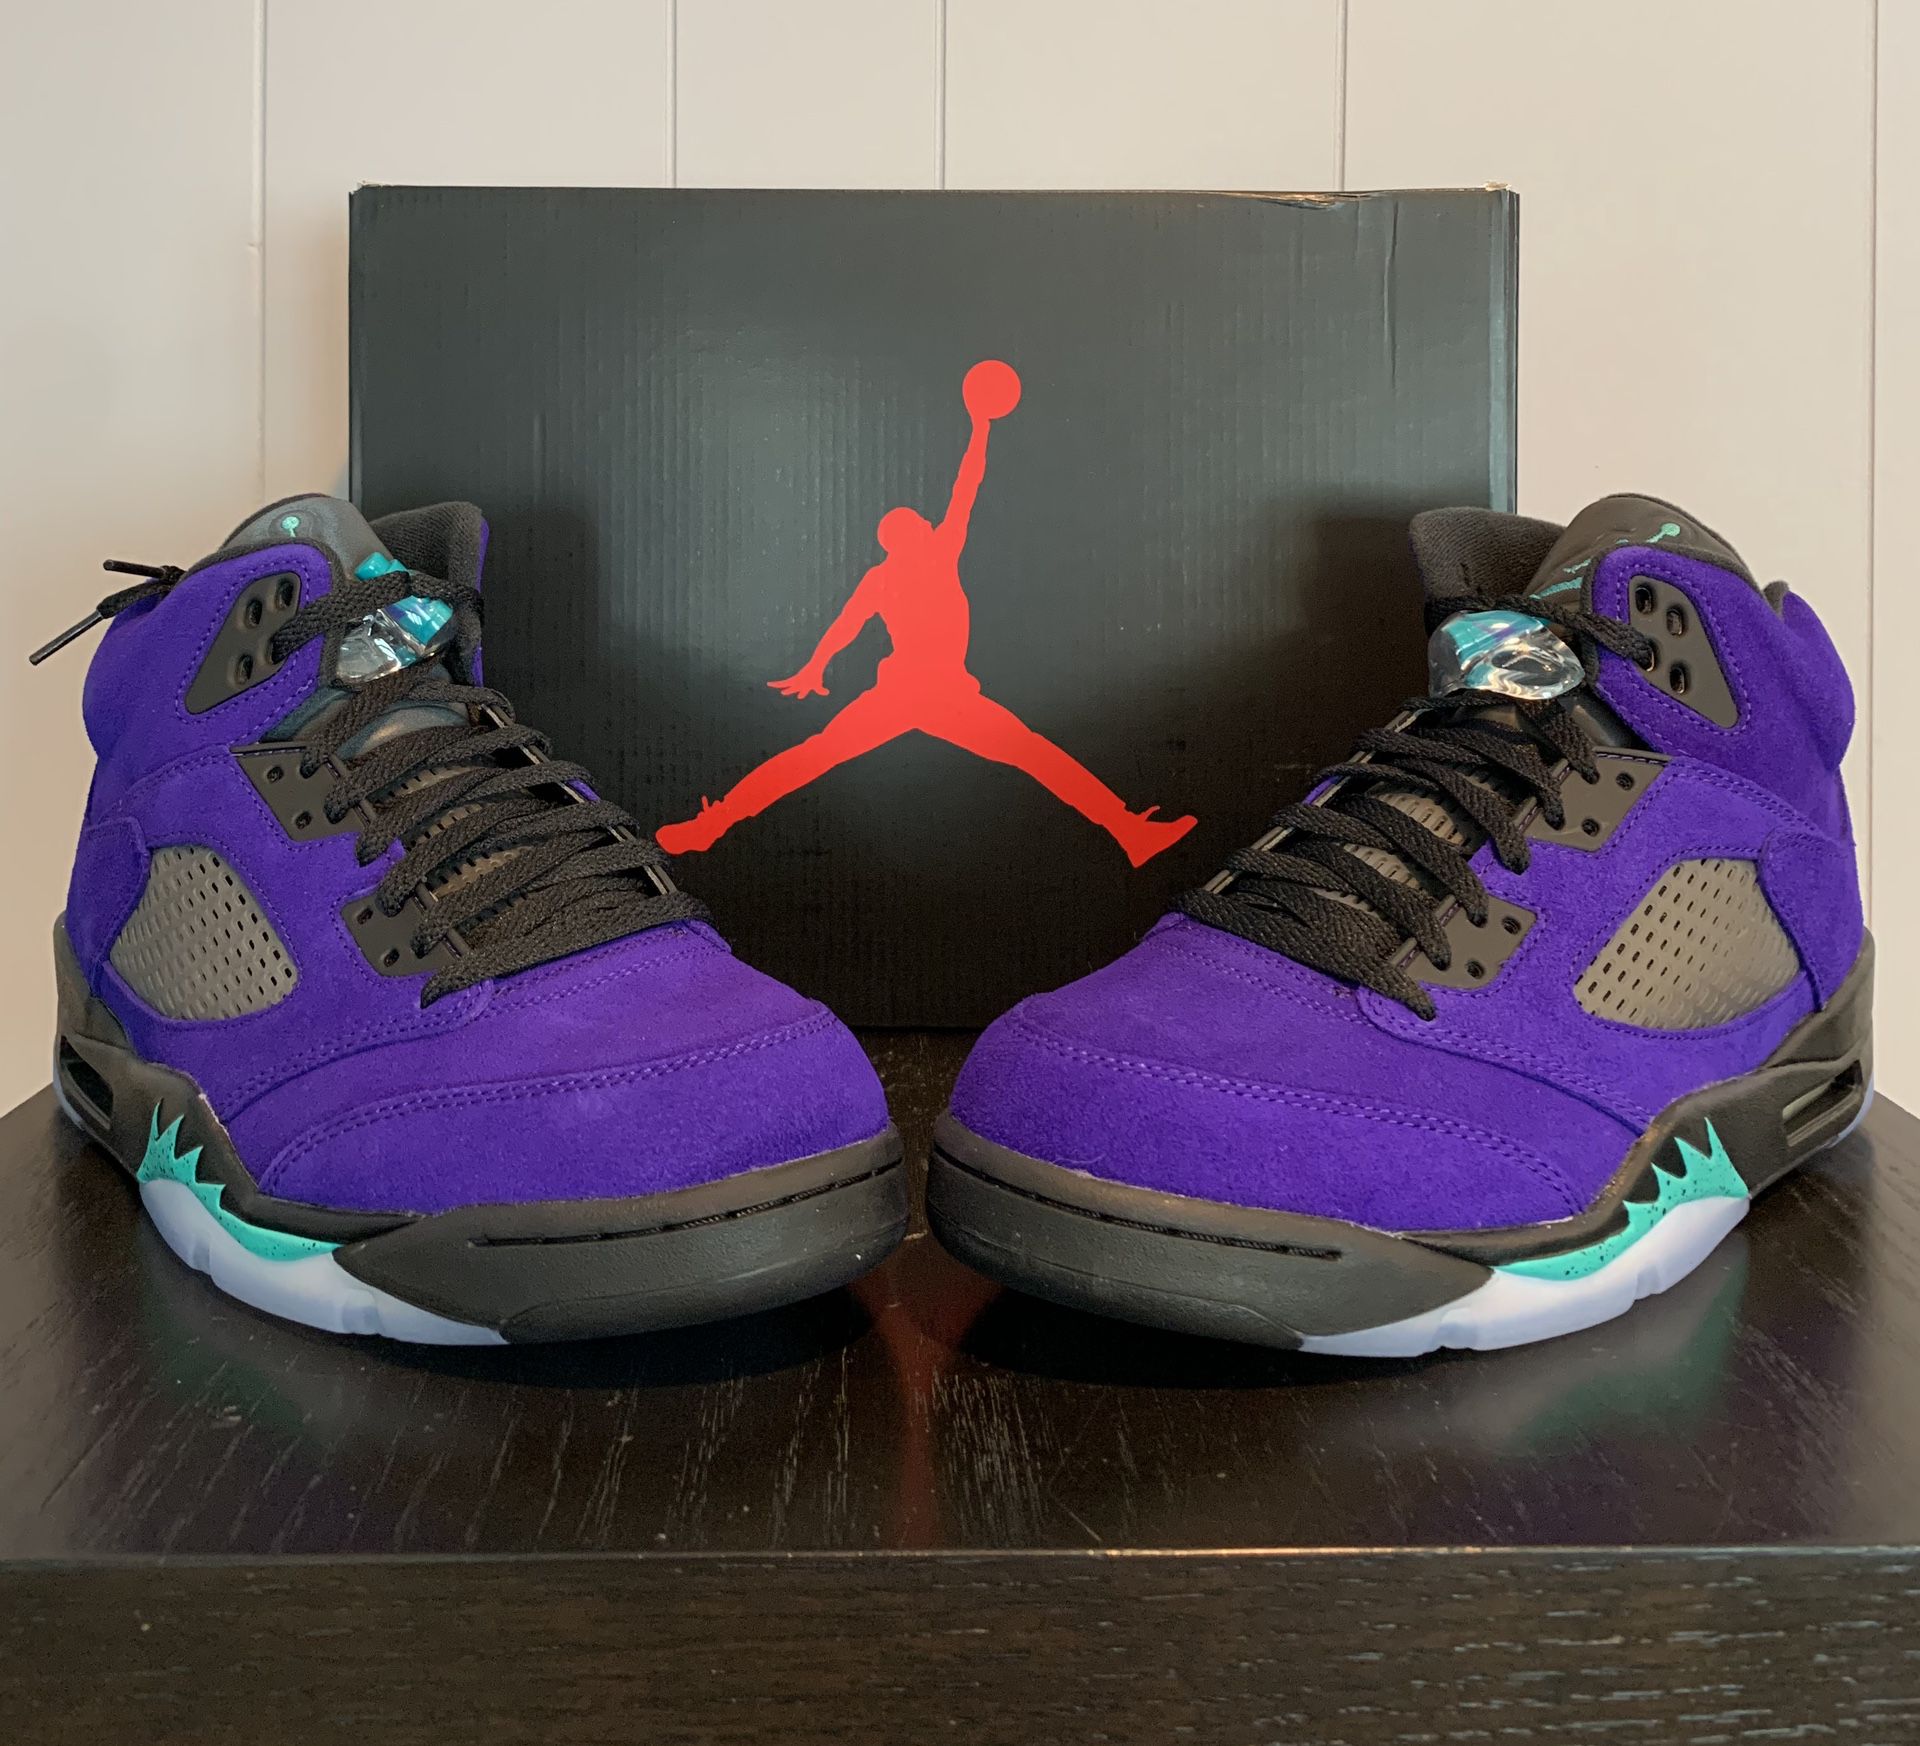 Air Jordan 5 Retro “Alternate Grape” - Size 9.5, 11, or 11.5